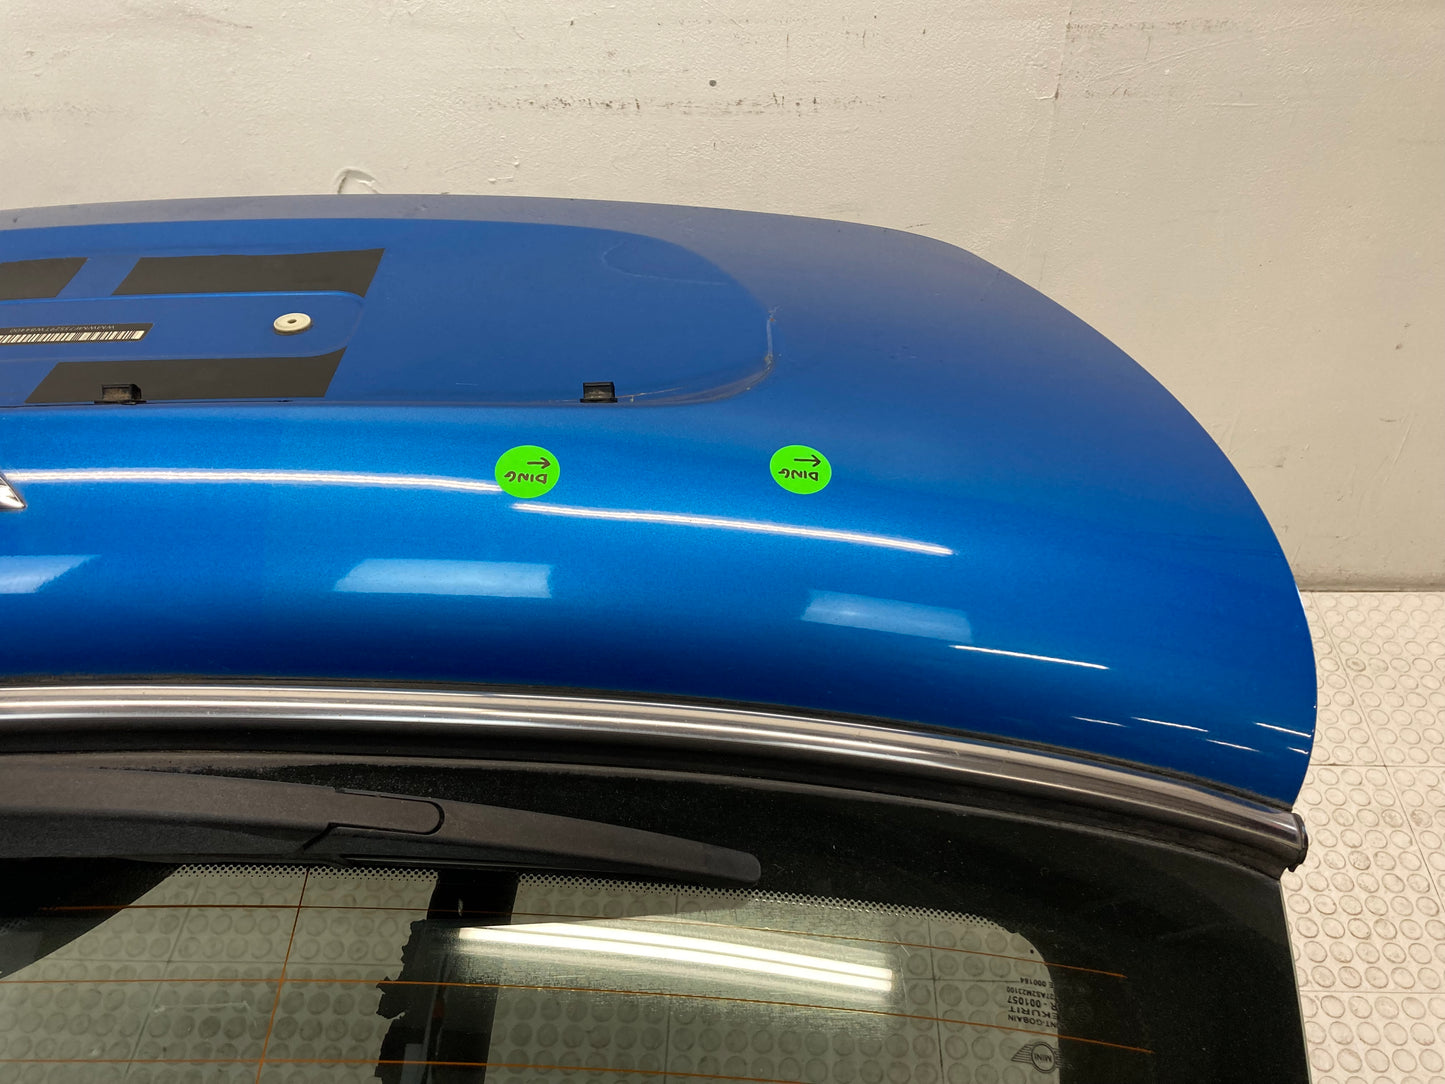 Mini Cooper Rear Hatch Laser Blue 41002752015 07-13 R56 405